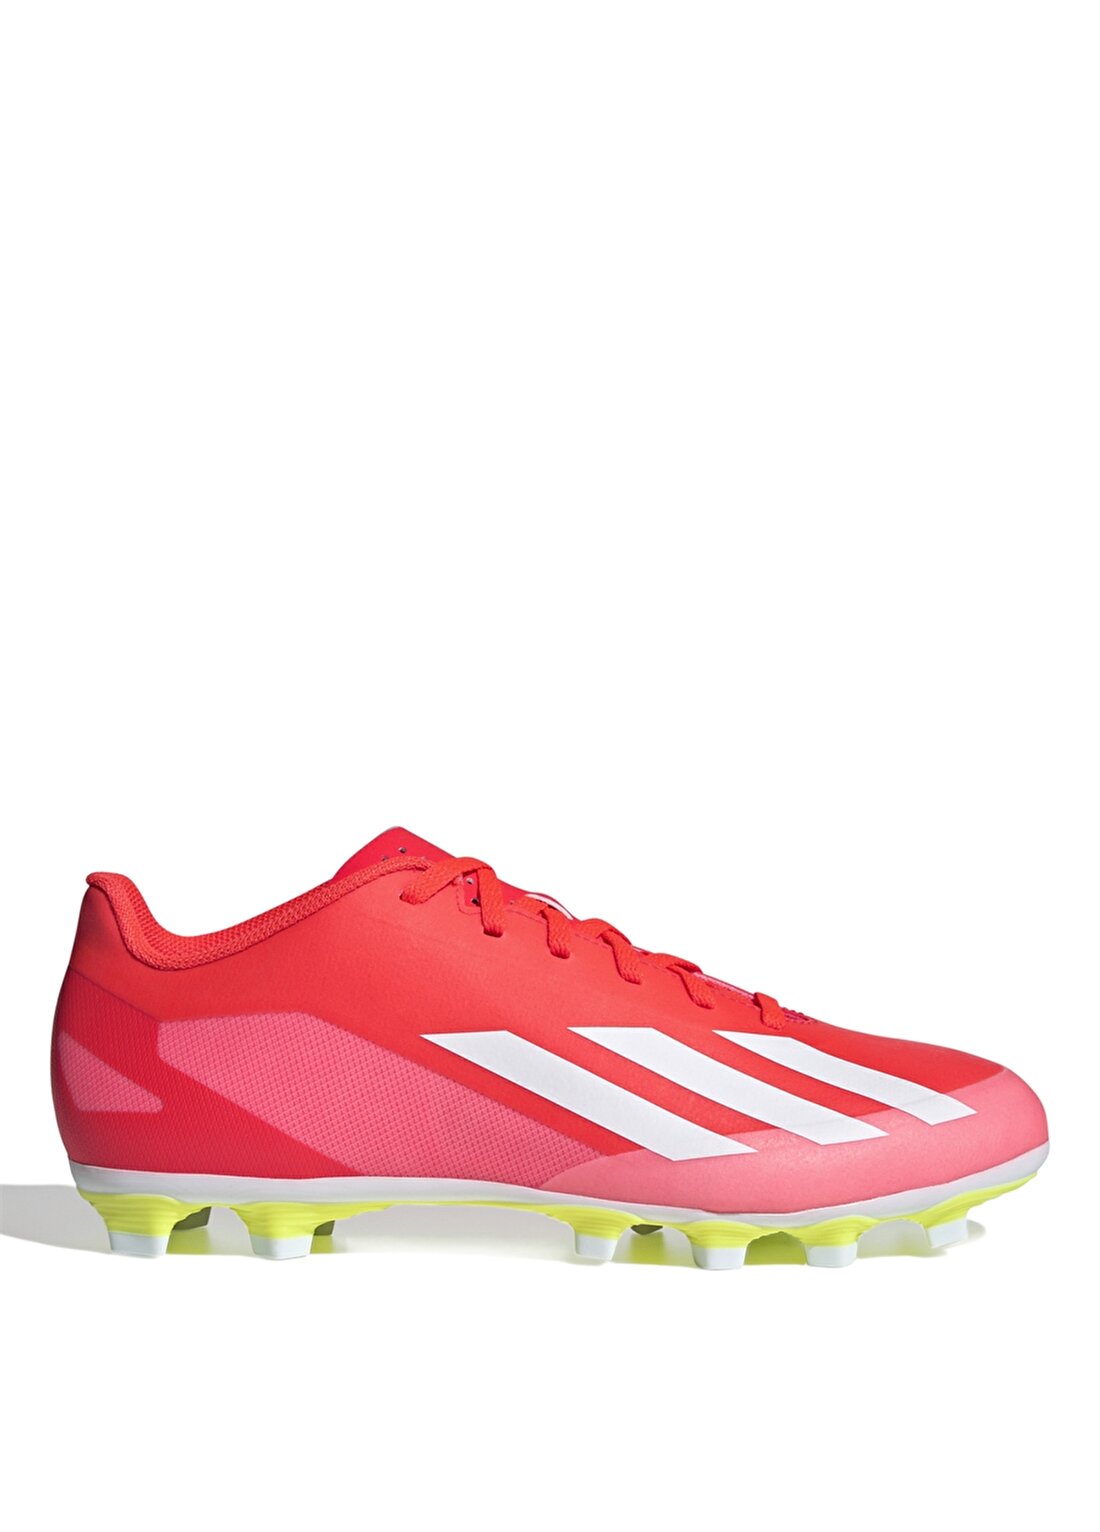 Adidas Turuncu Erkek Futbol Ayakkabısı IG0616 X